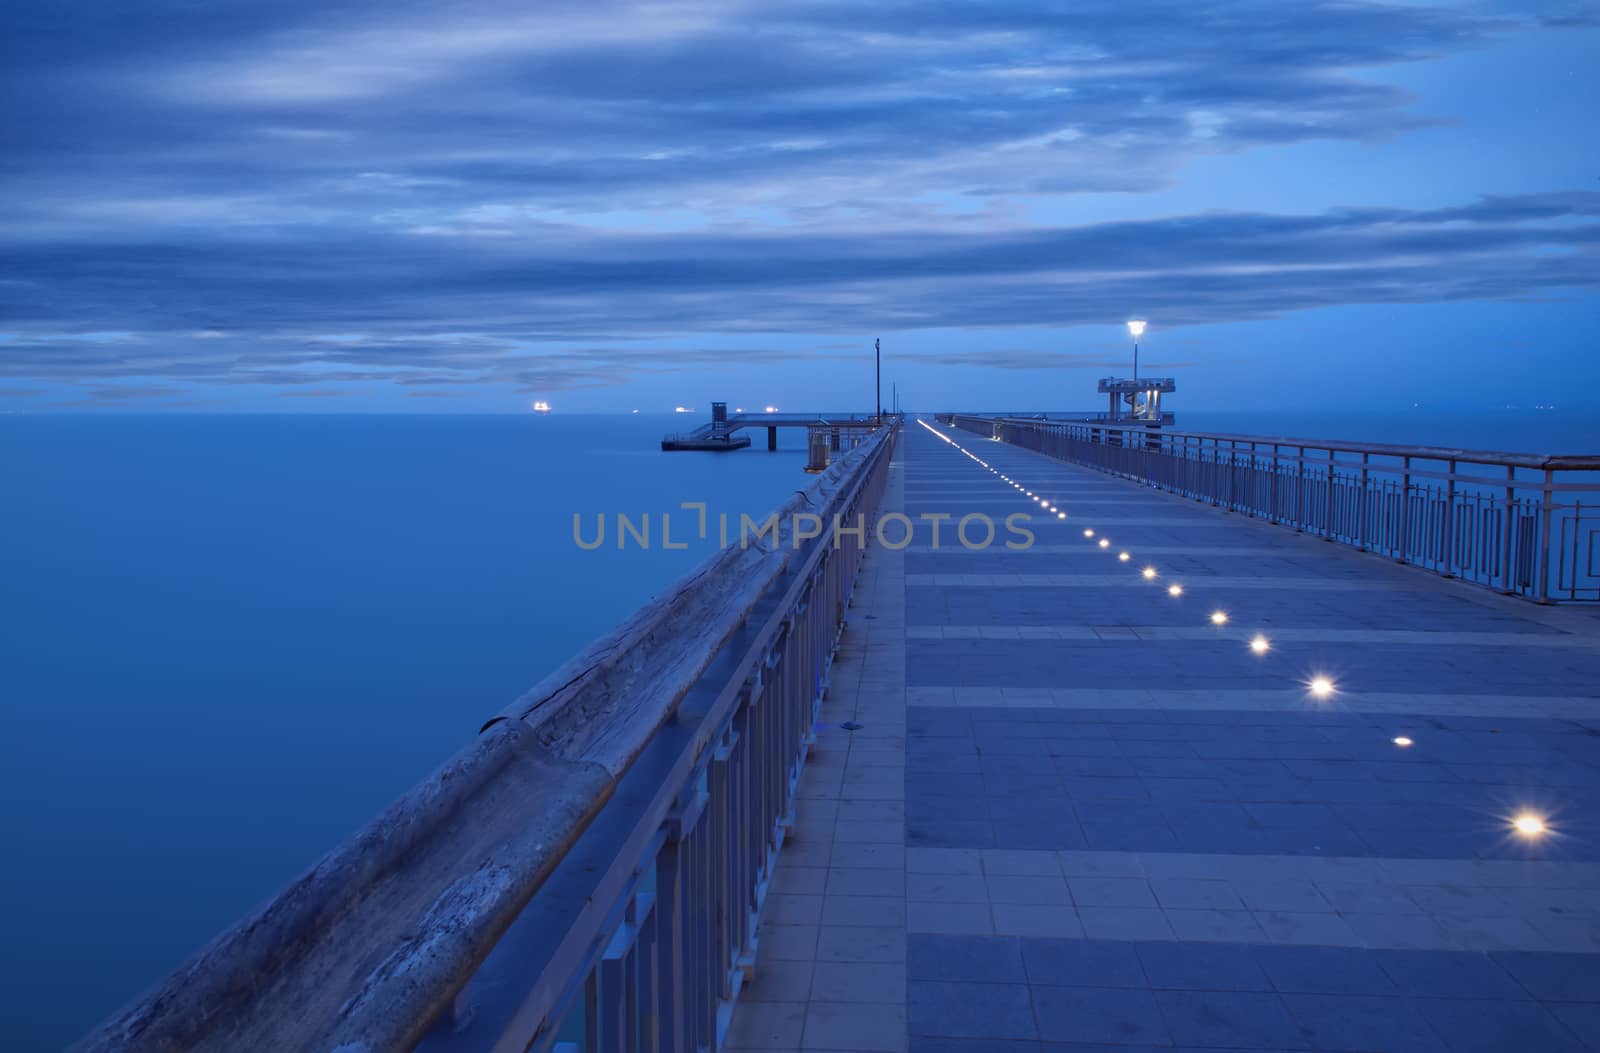 Before sunrise in Burgas bay. Bridge in Burgas, Bulgaria. Long exposure, blue hour. Kay port